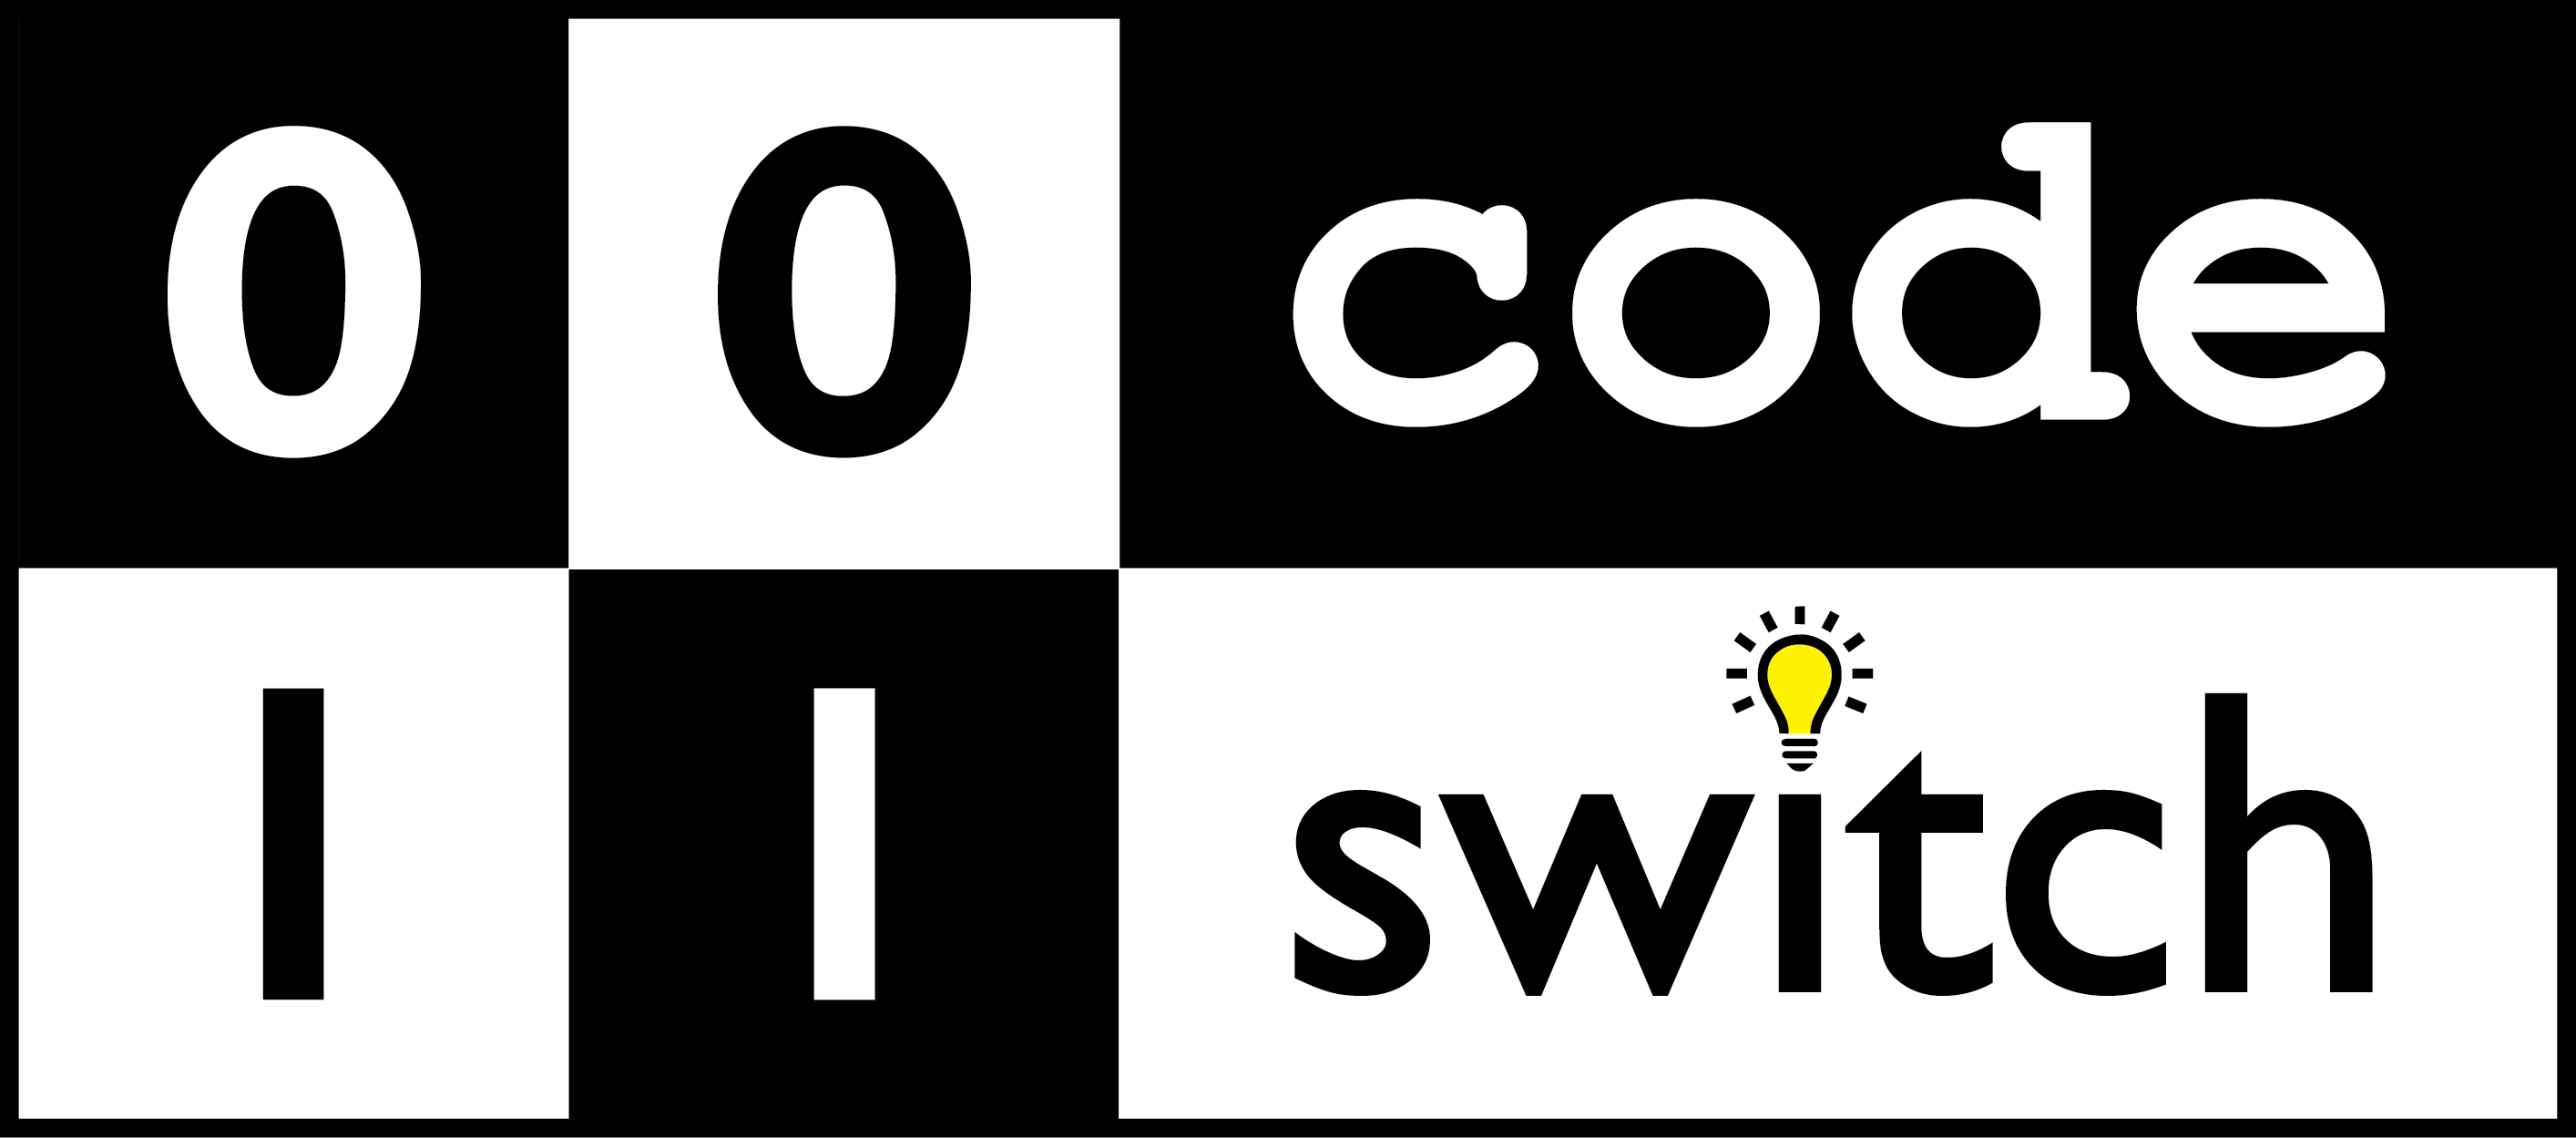 Code Switch logo